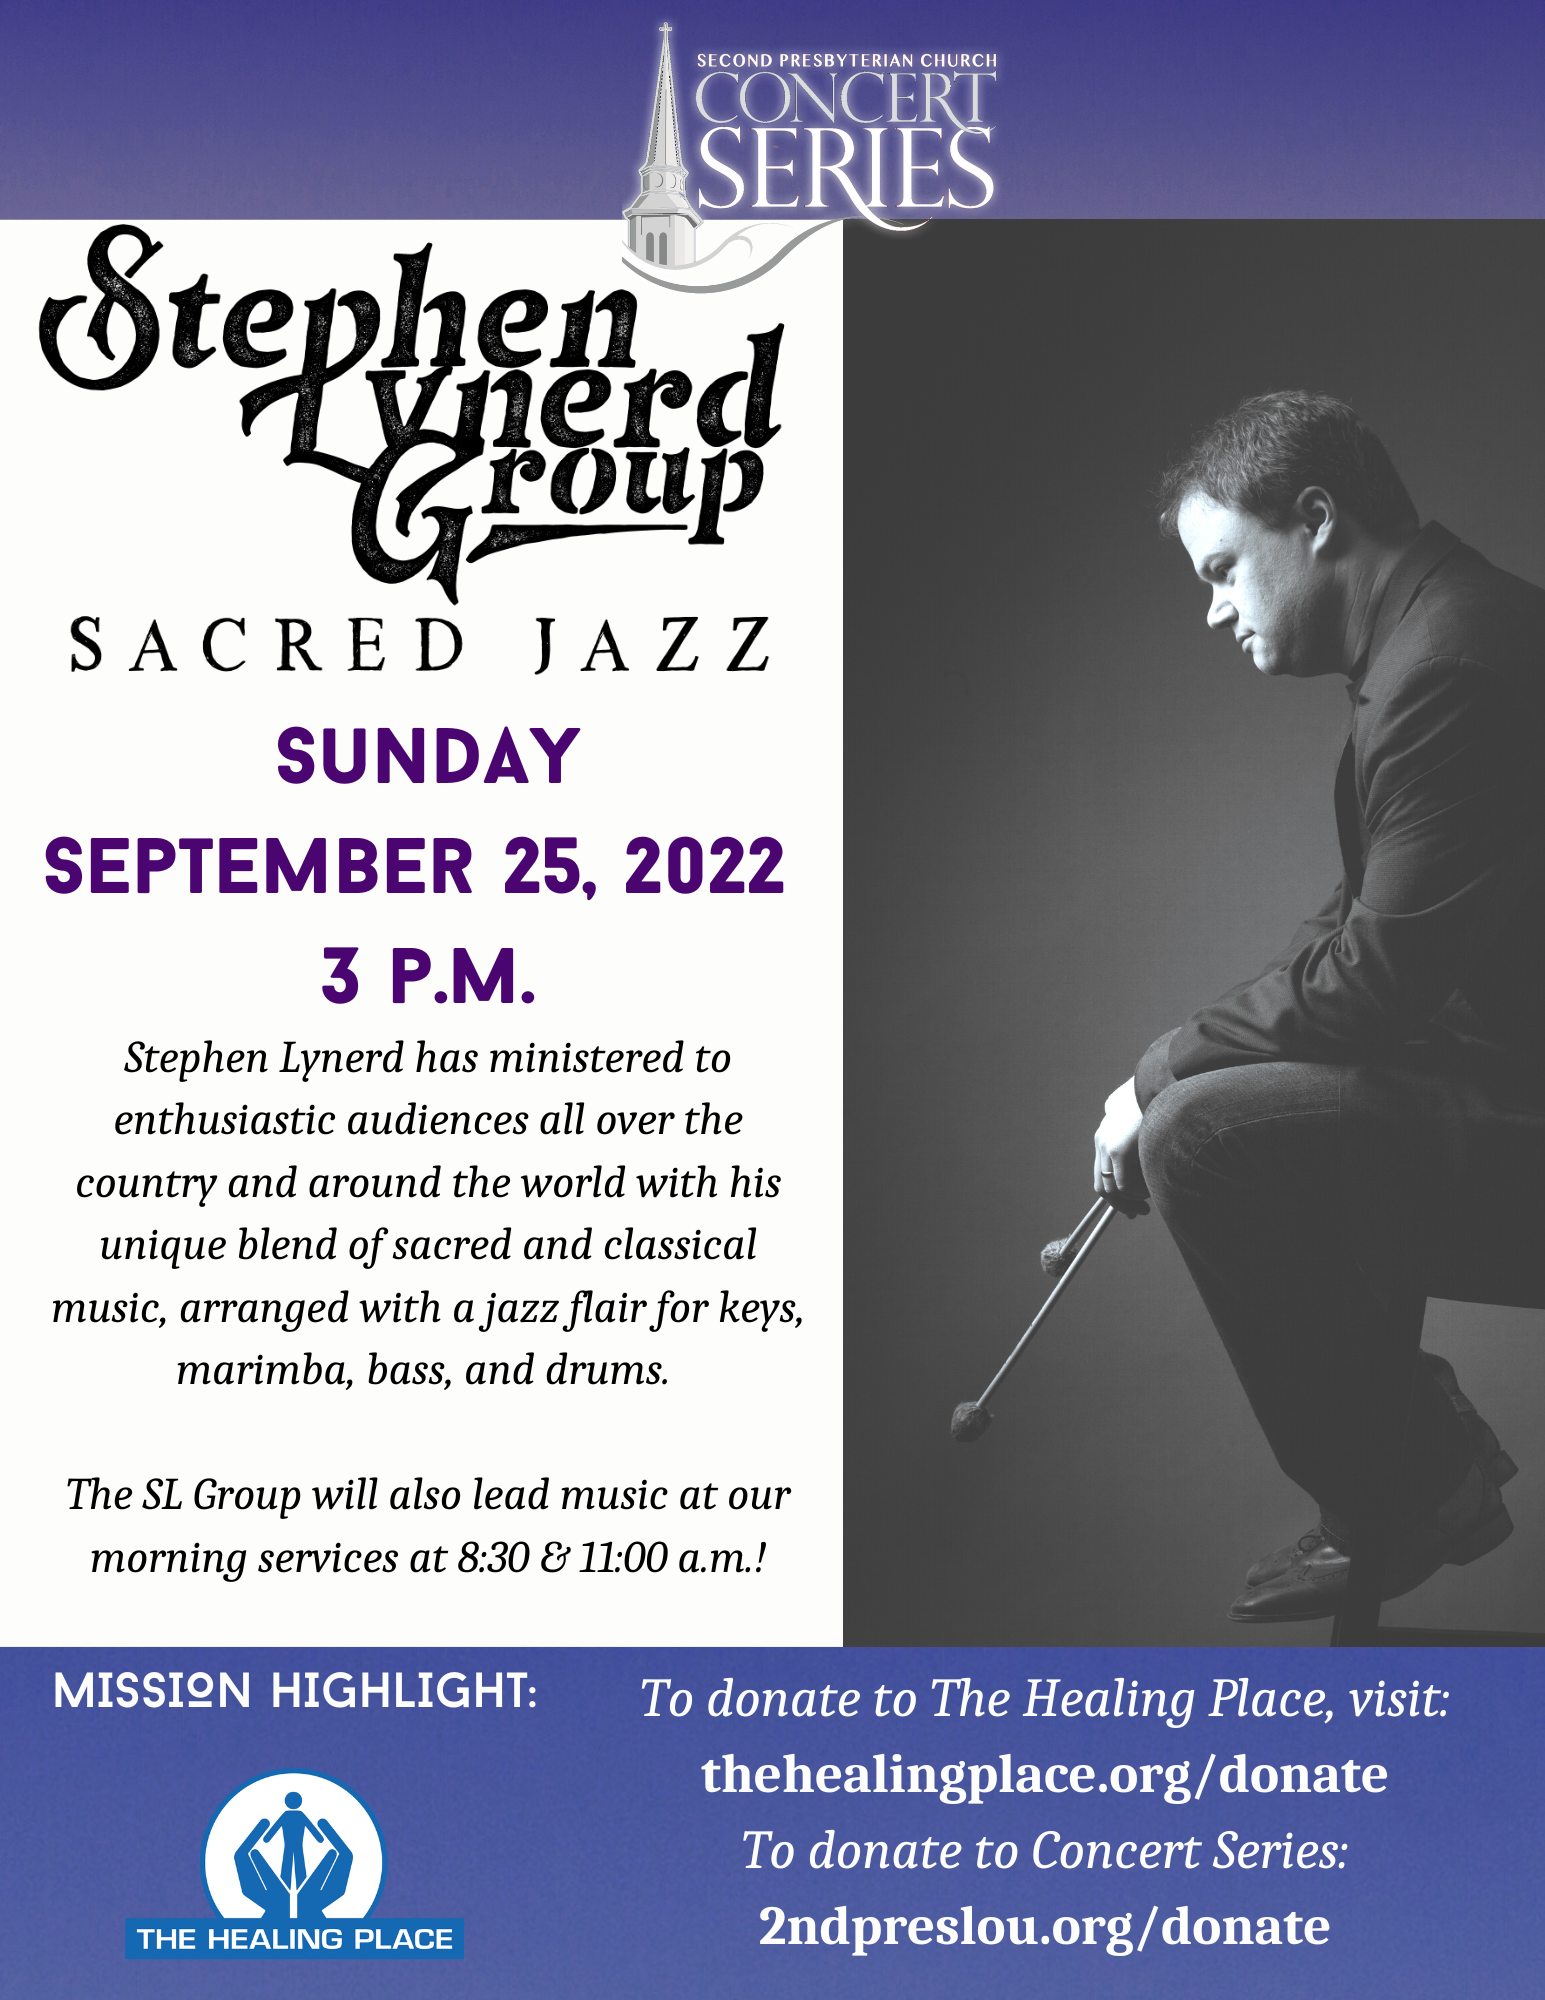 Stephen Lyndard Group Sacred Jazz